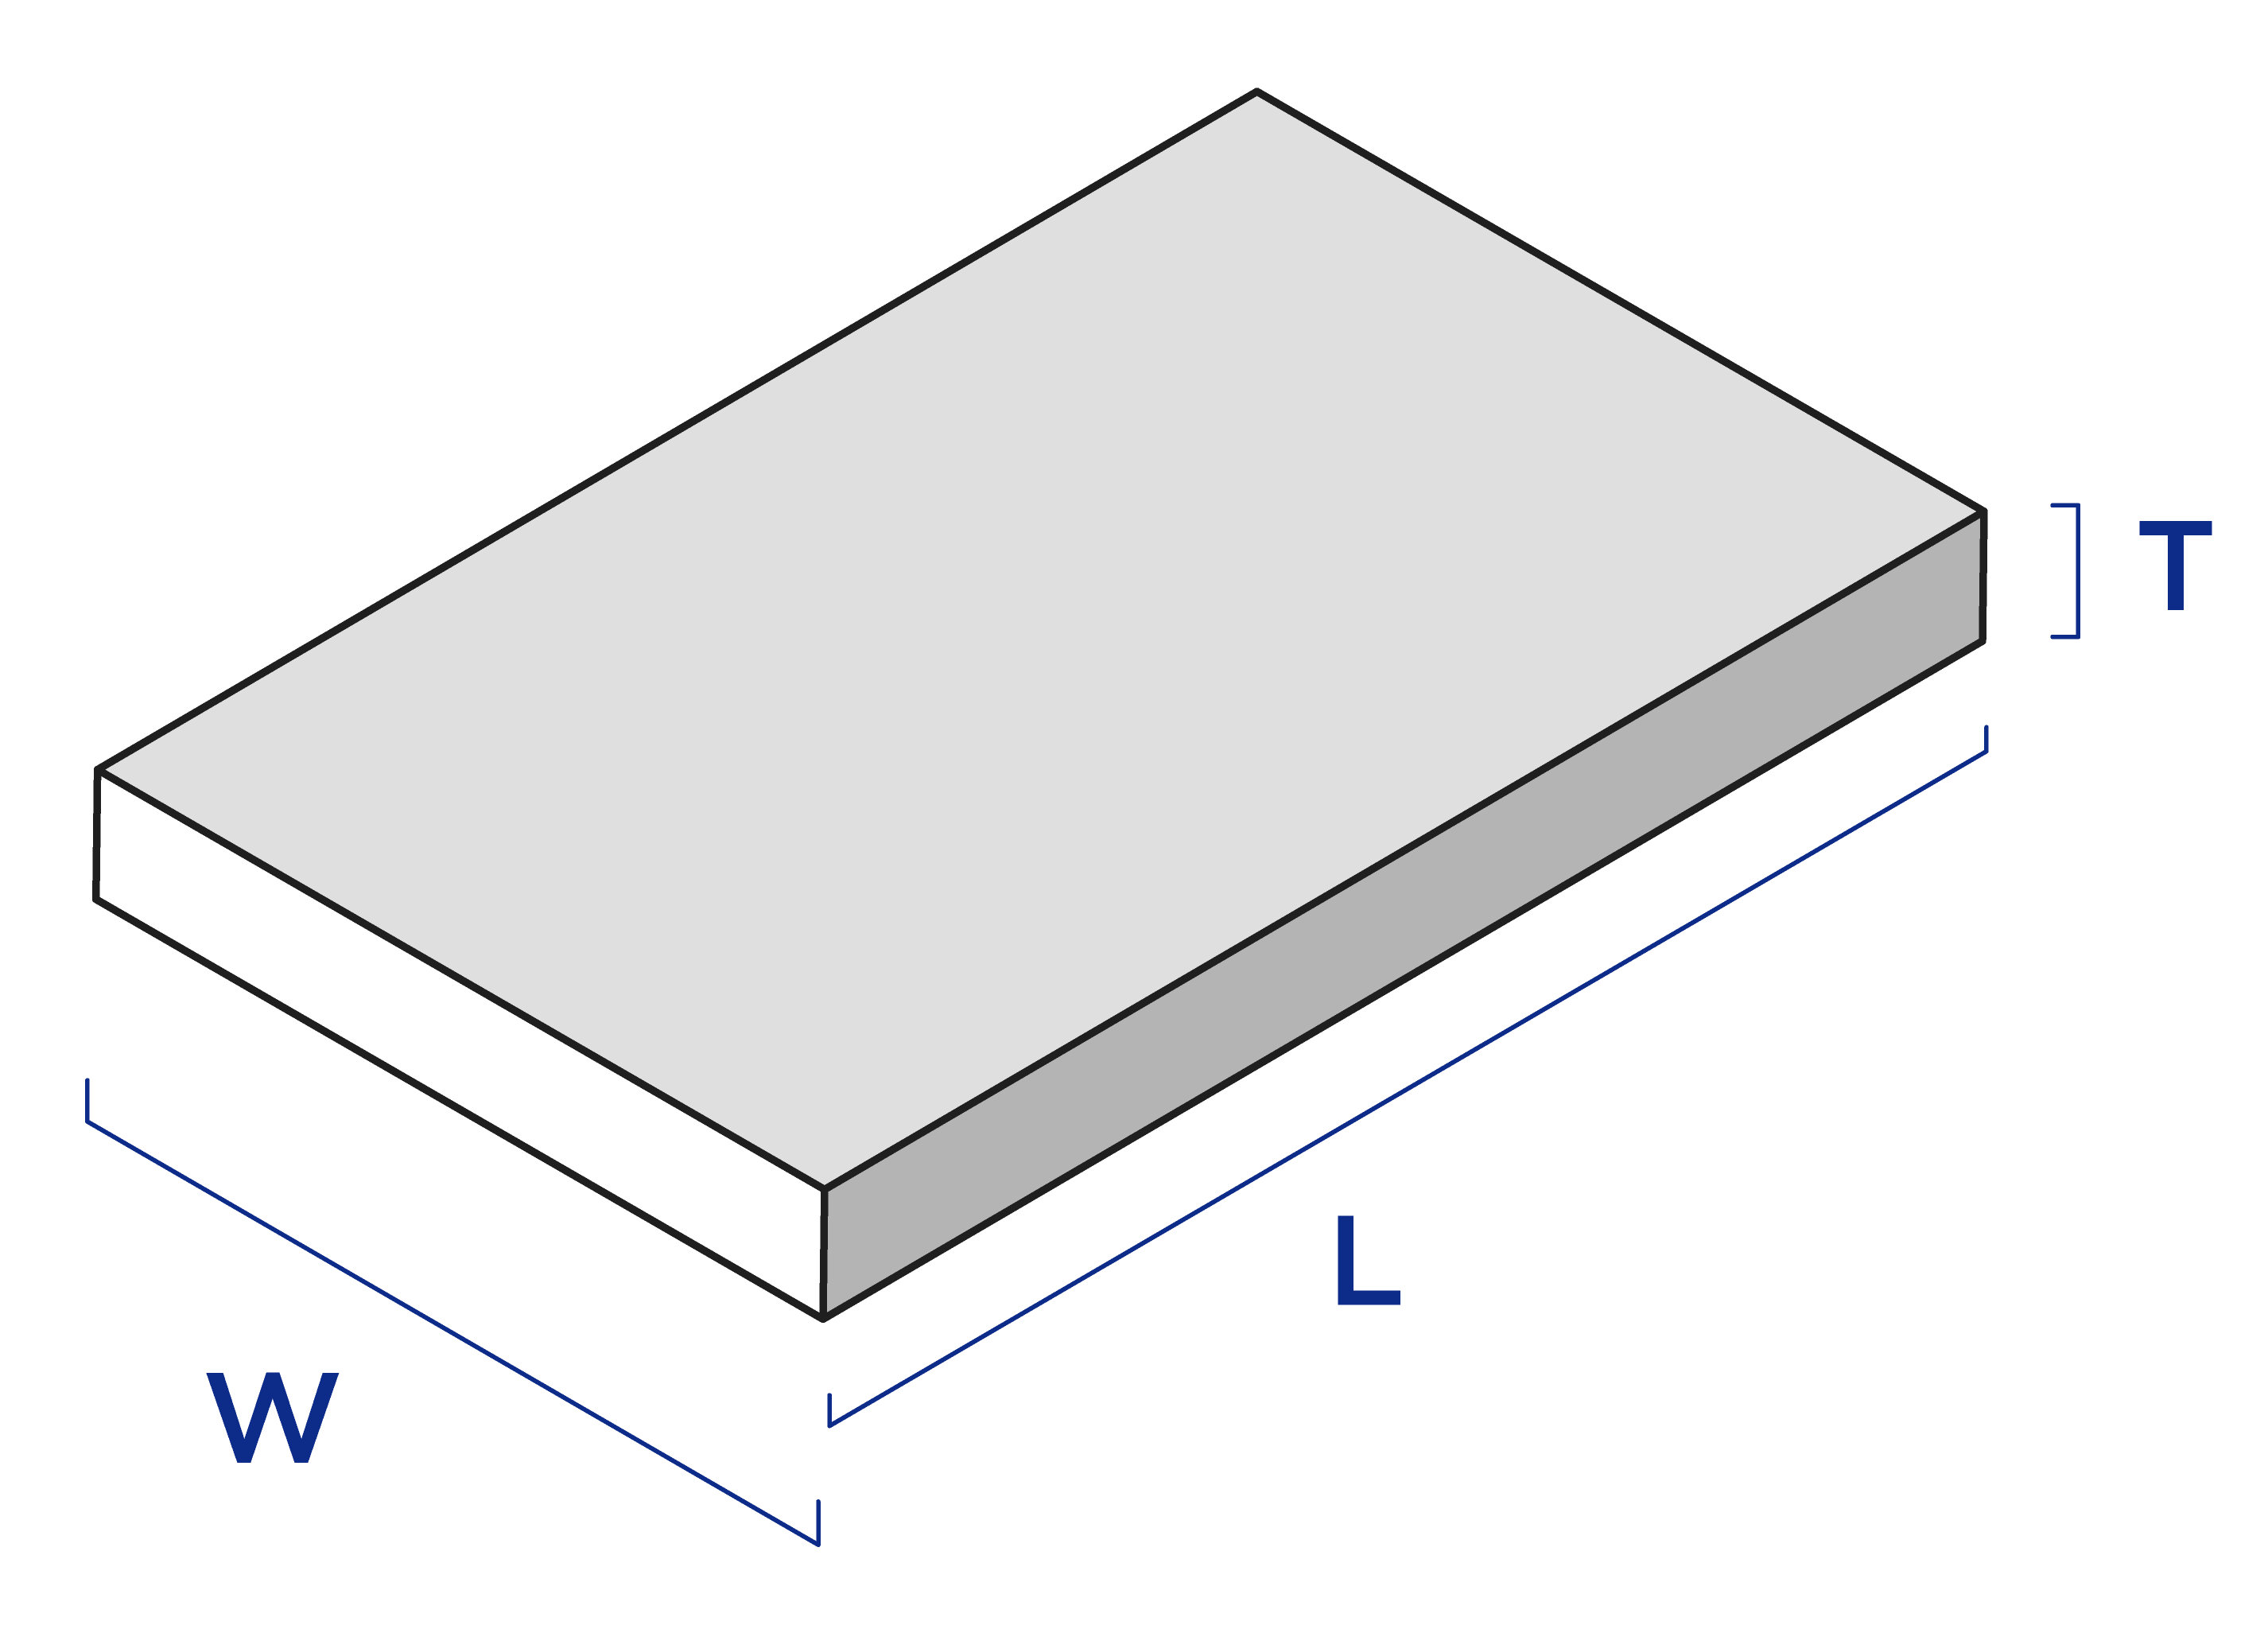 Diagram to represent how to measure metal